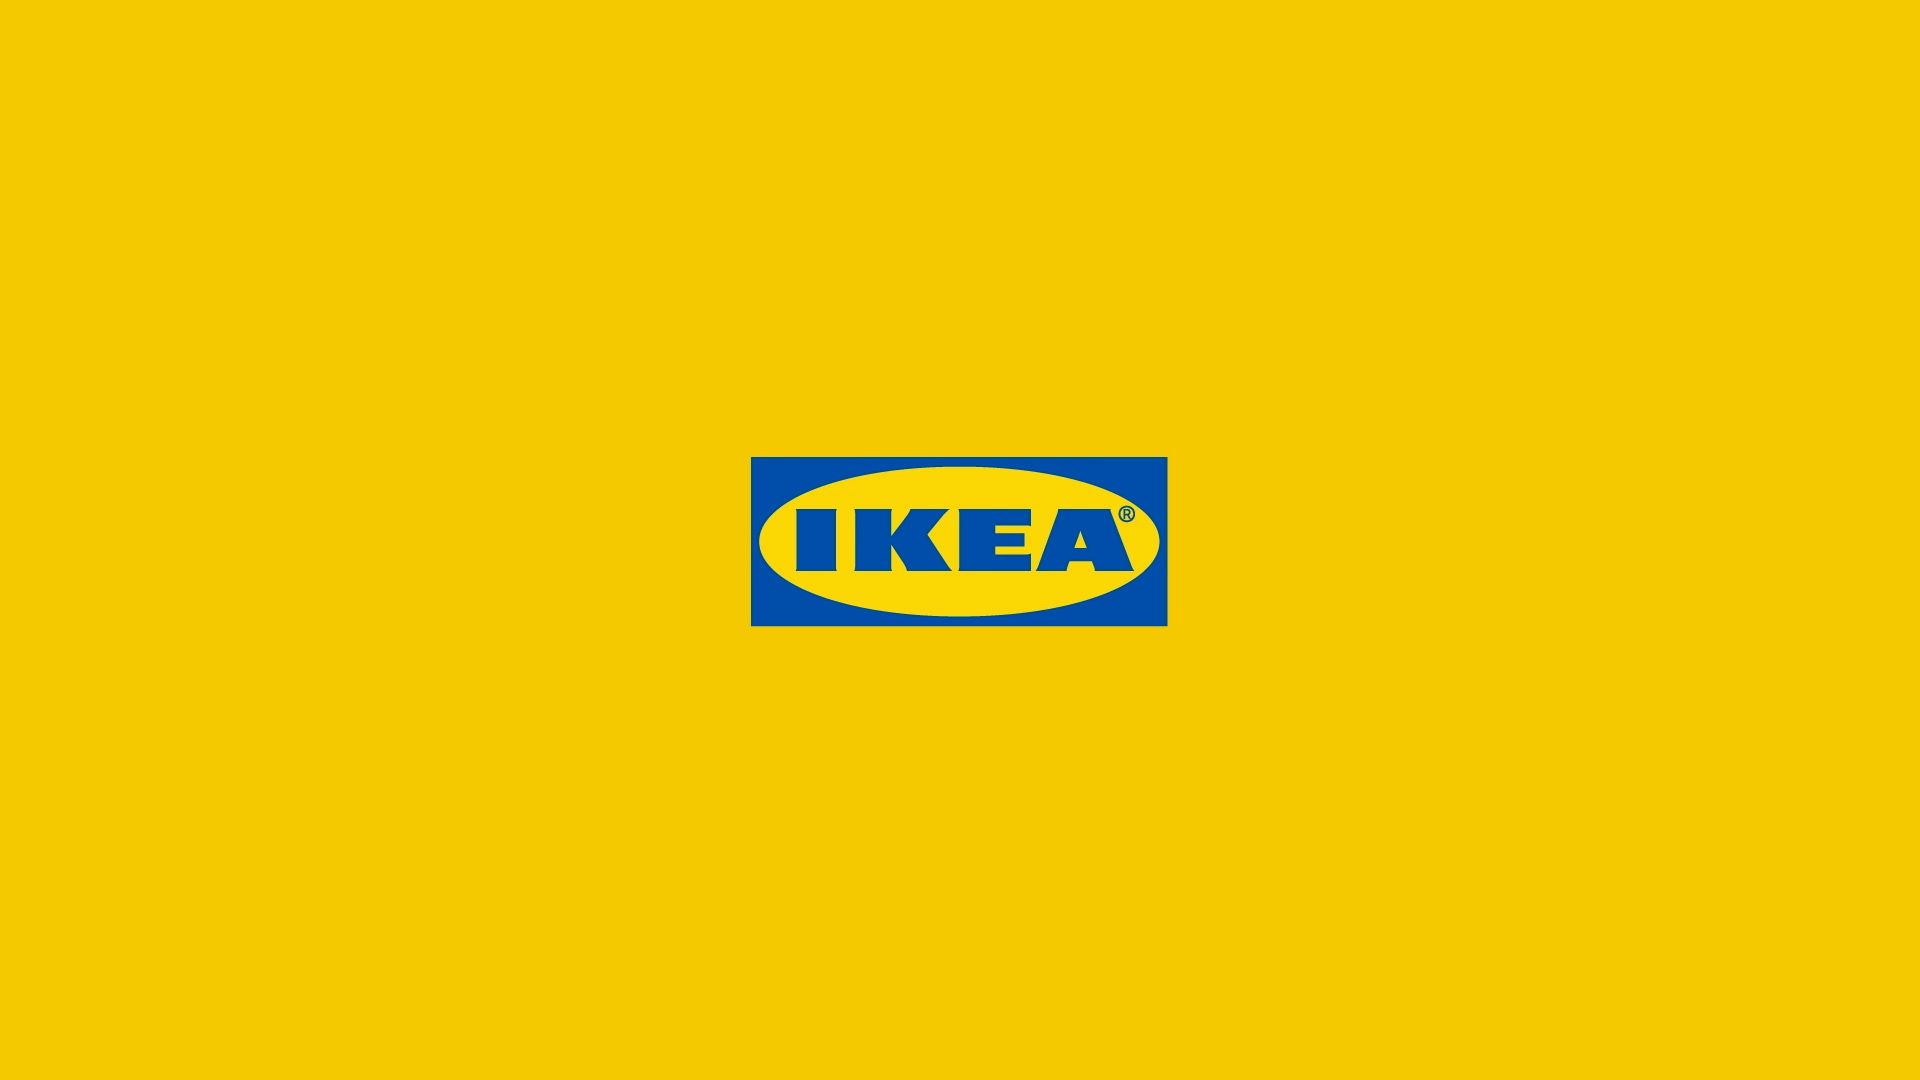 Ikea case study